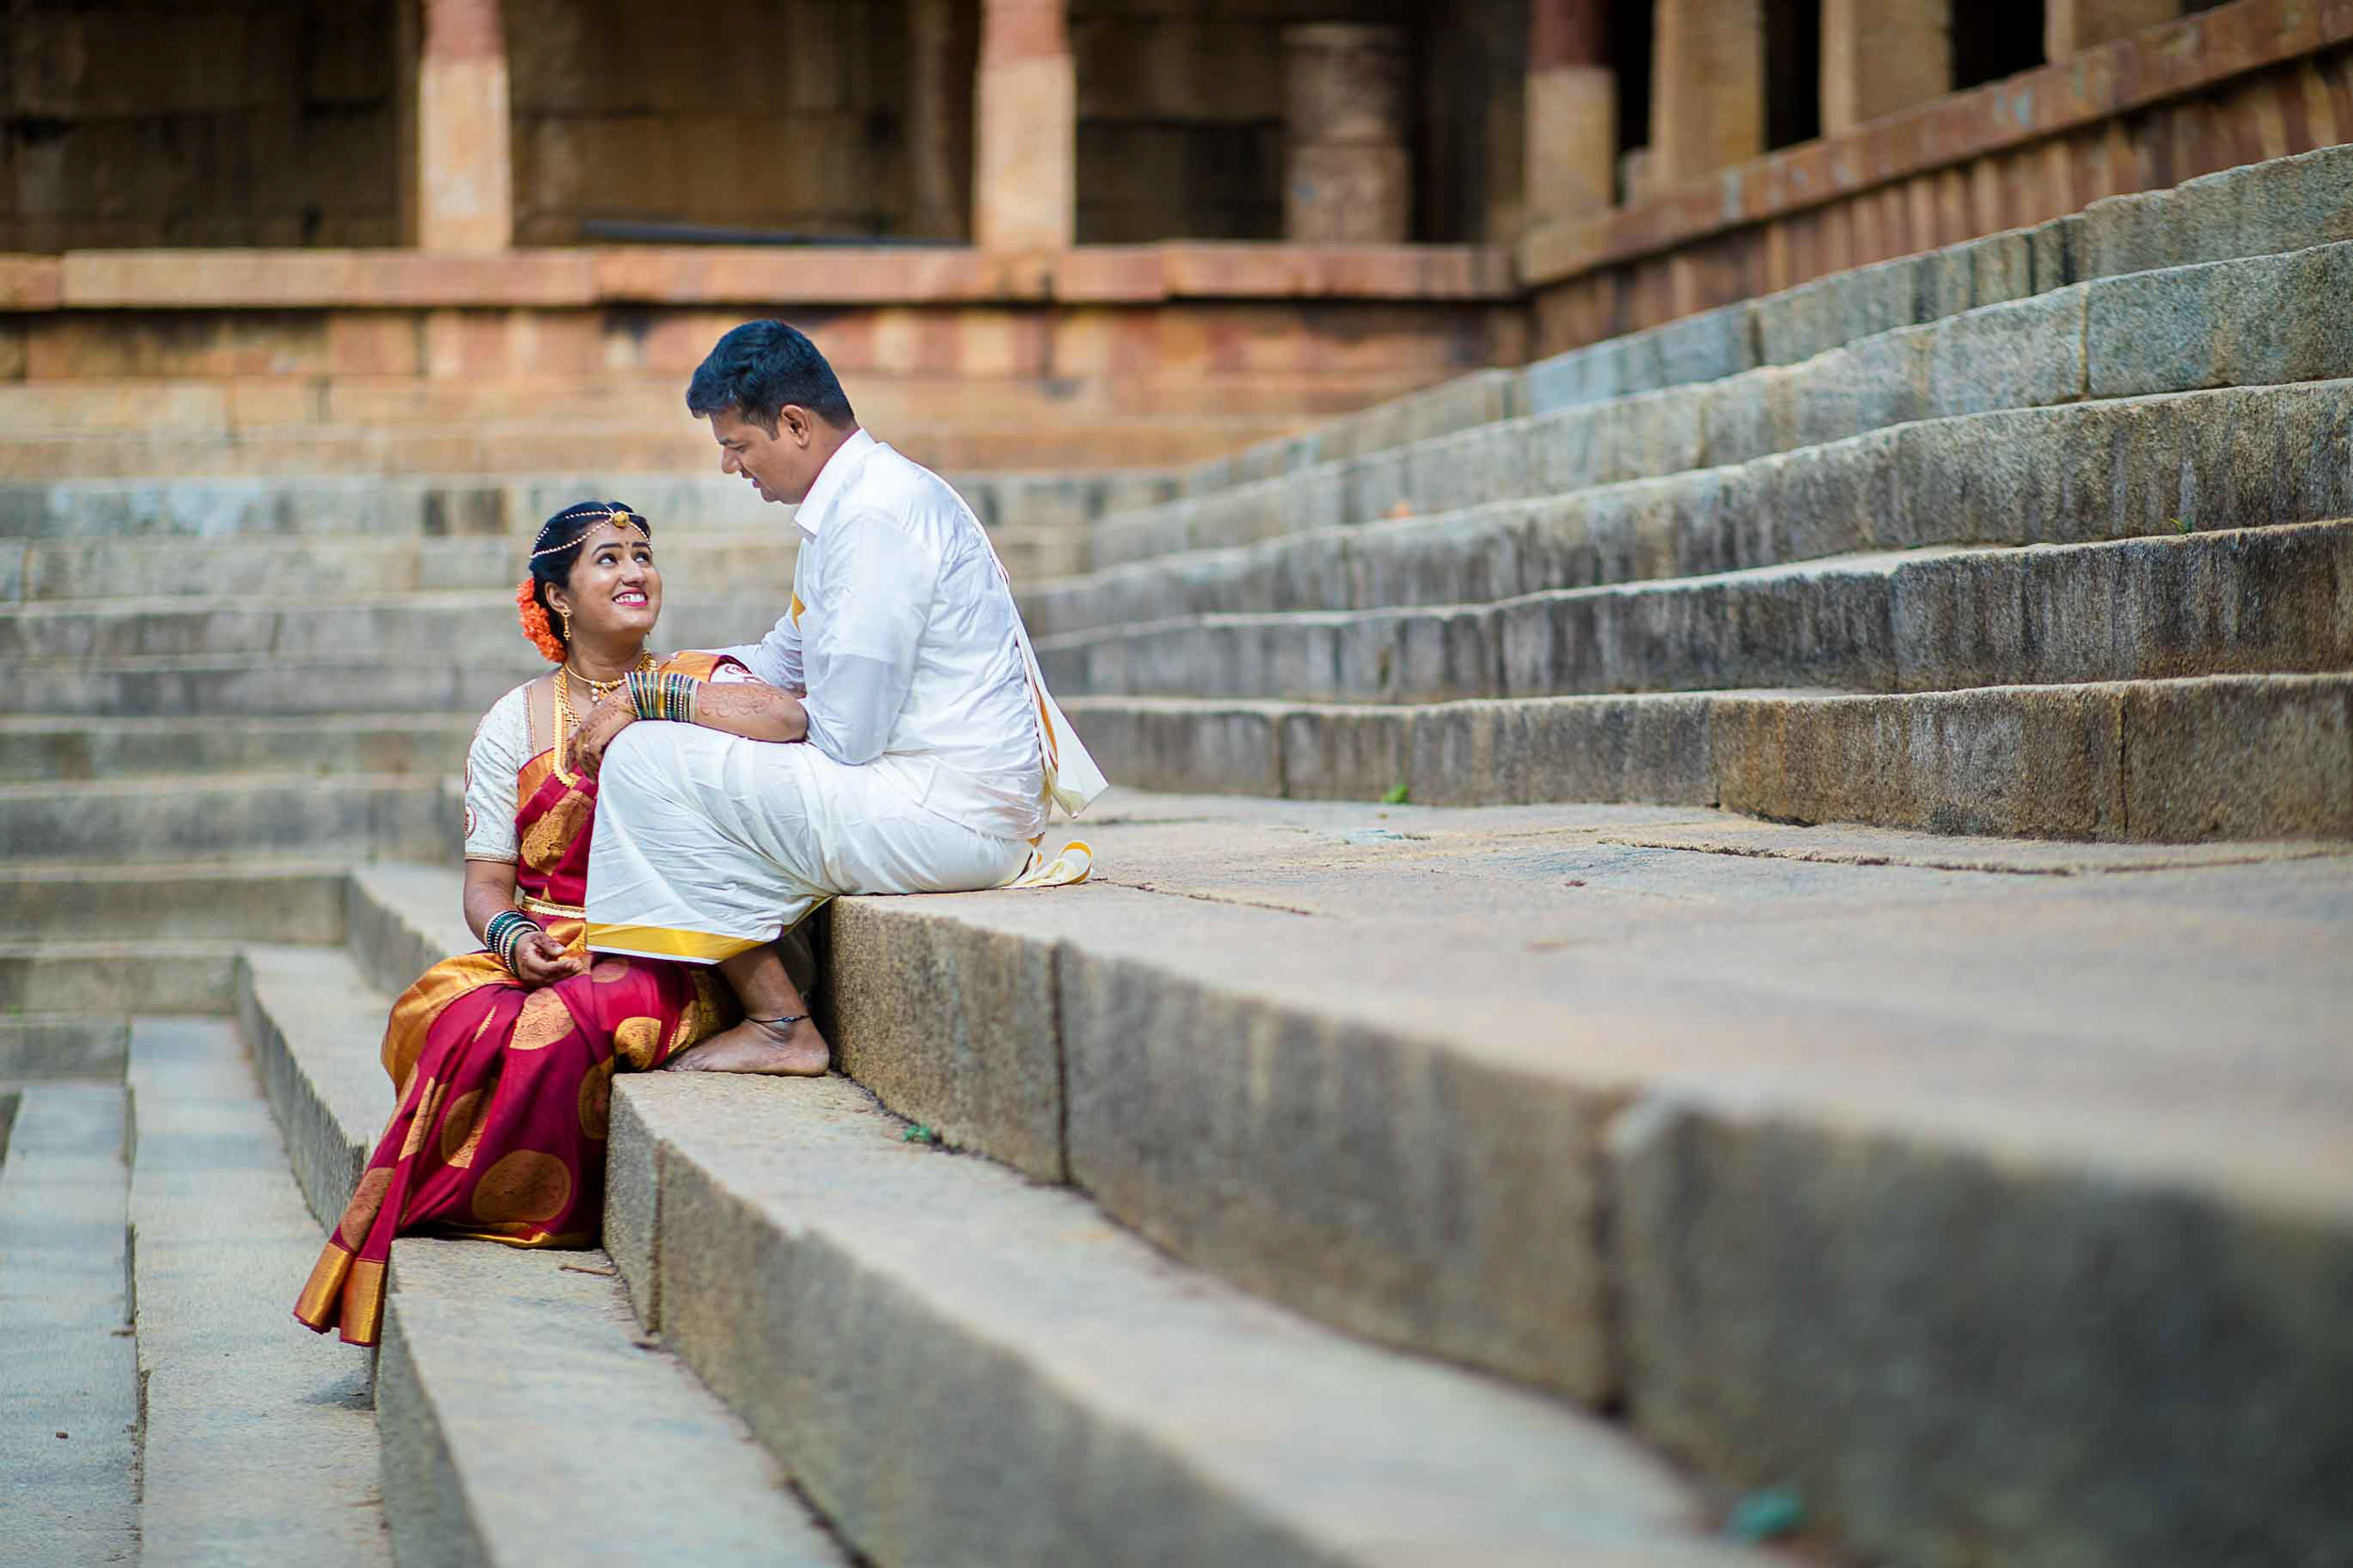 Pixel-Chronicles-Basavaraj_Pooja-bhoganandishwara-temple-Kalyani-Candid-Wedding-Photography-South-Indian-Wedding-Couple-Photoshoot-25.jpg